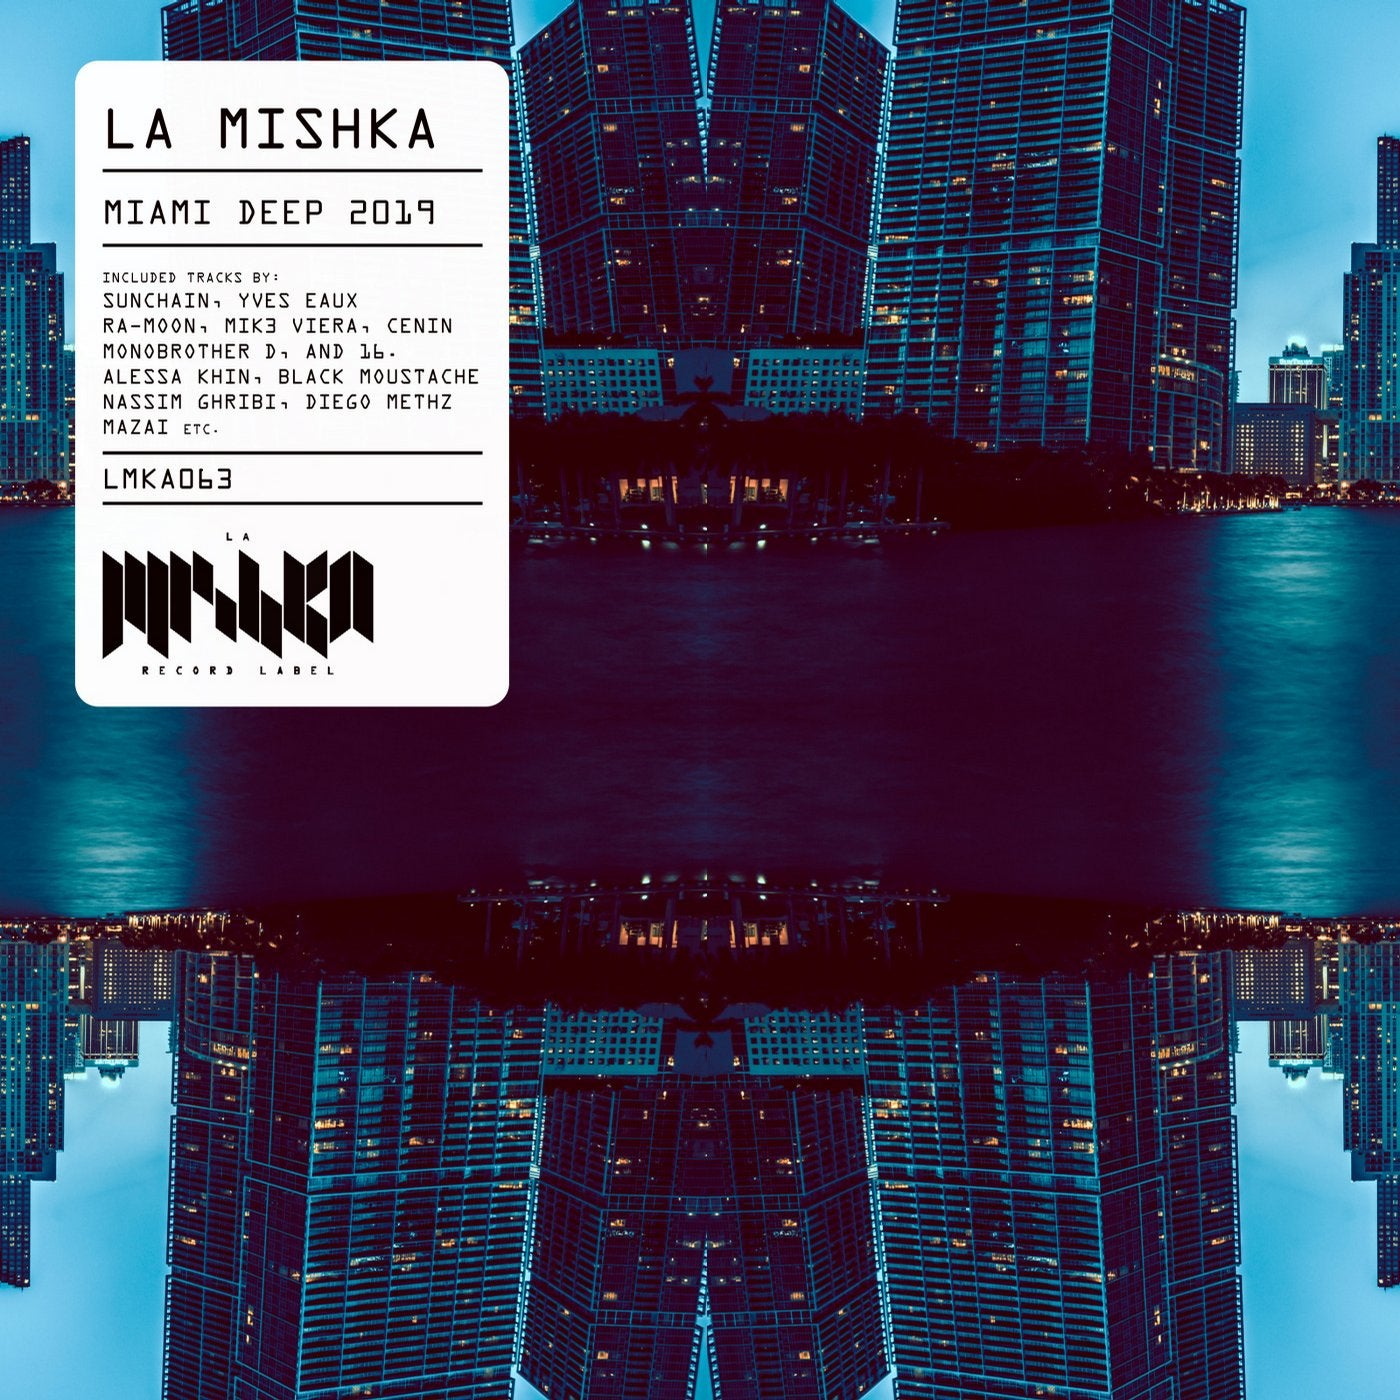 La Mishka. Alessa Khin, Diego METHZ - solo Moon. Man on moon extended mix